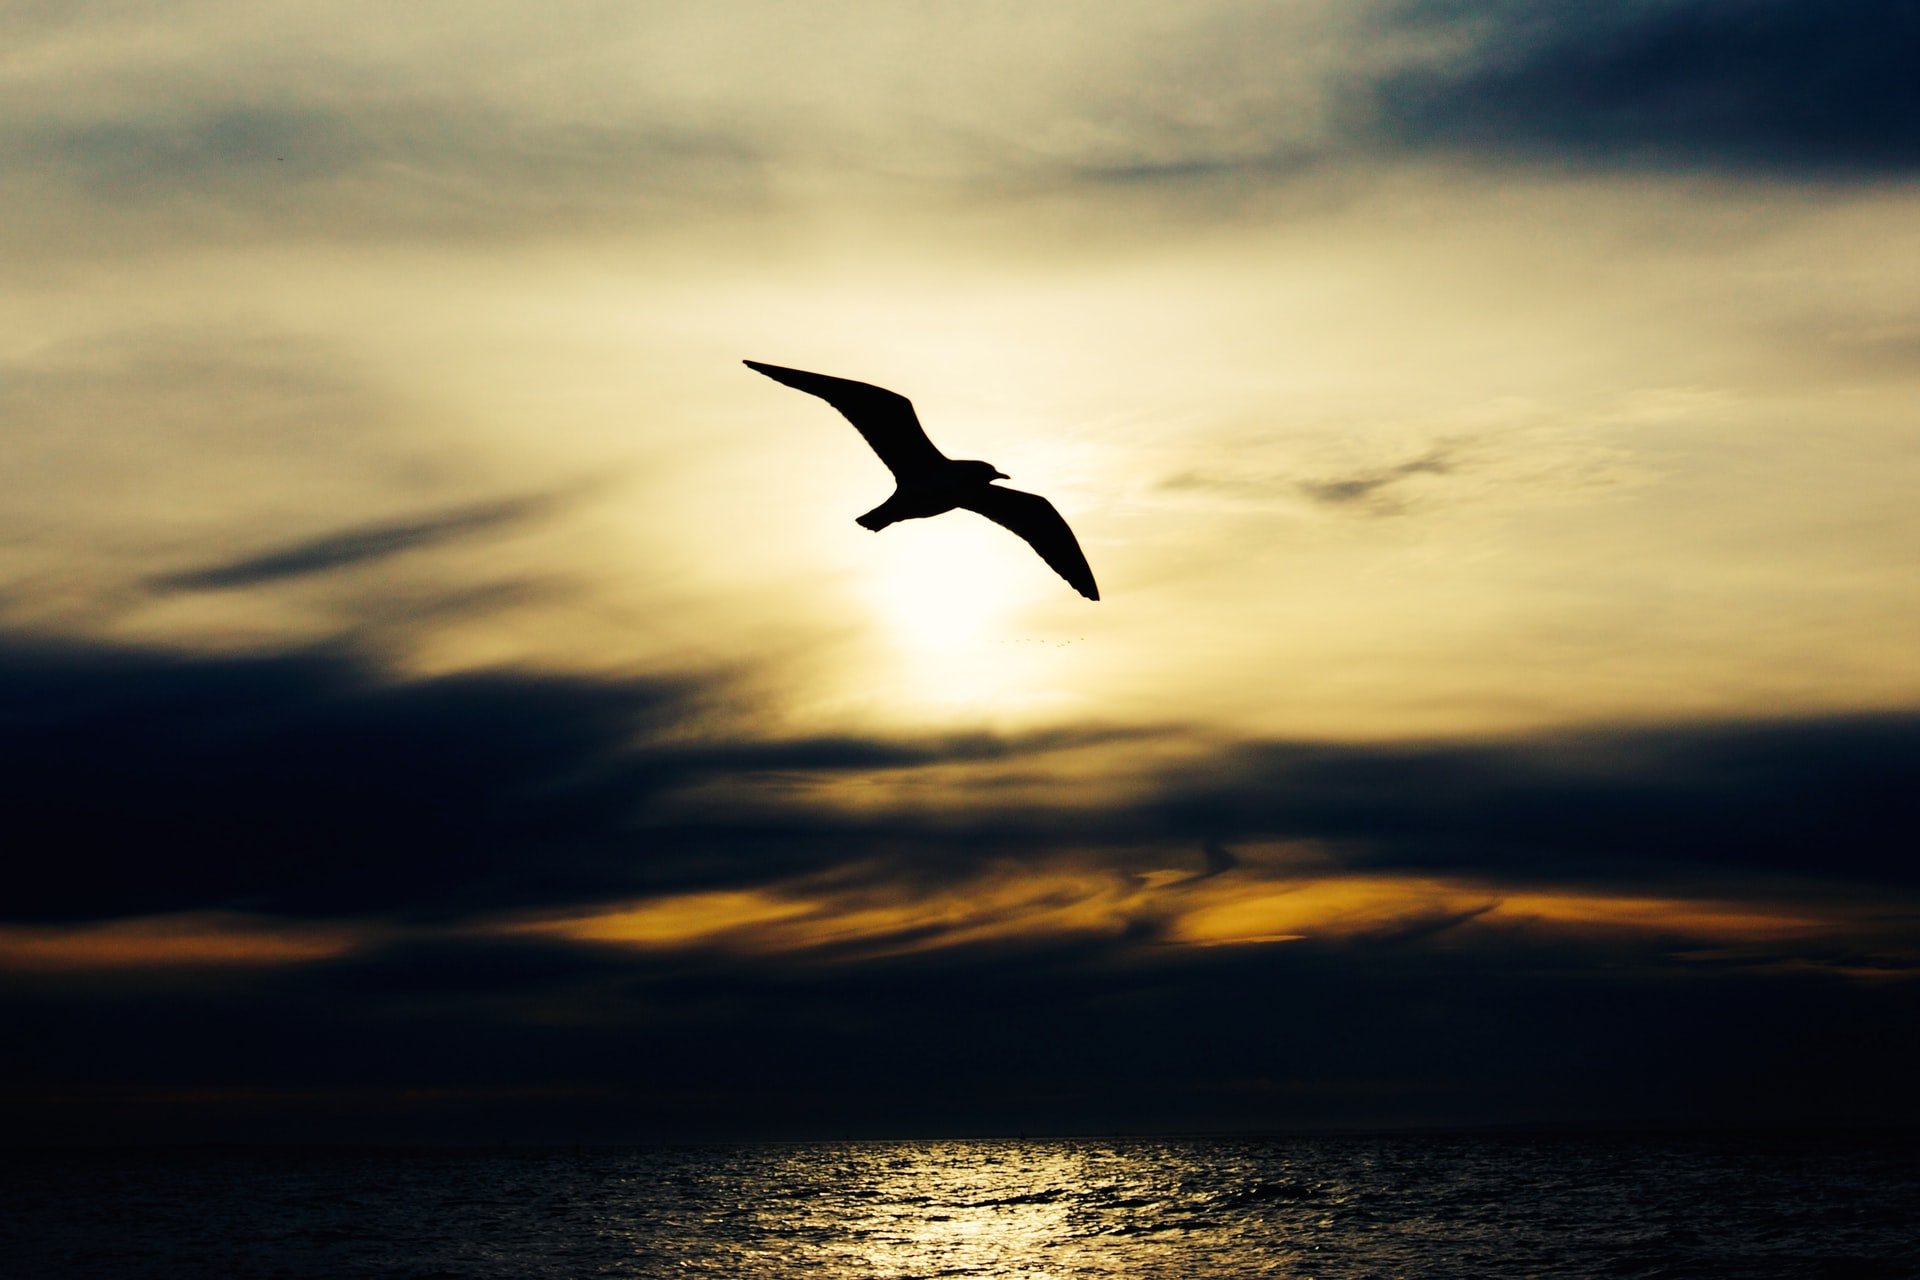 Silhouette of bird in flight